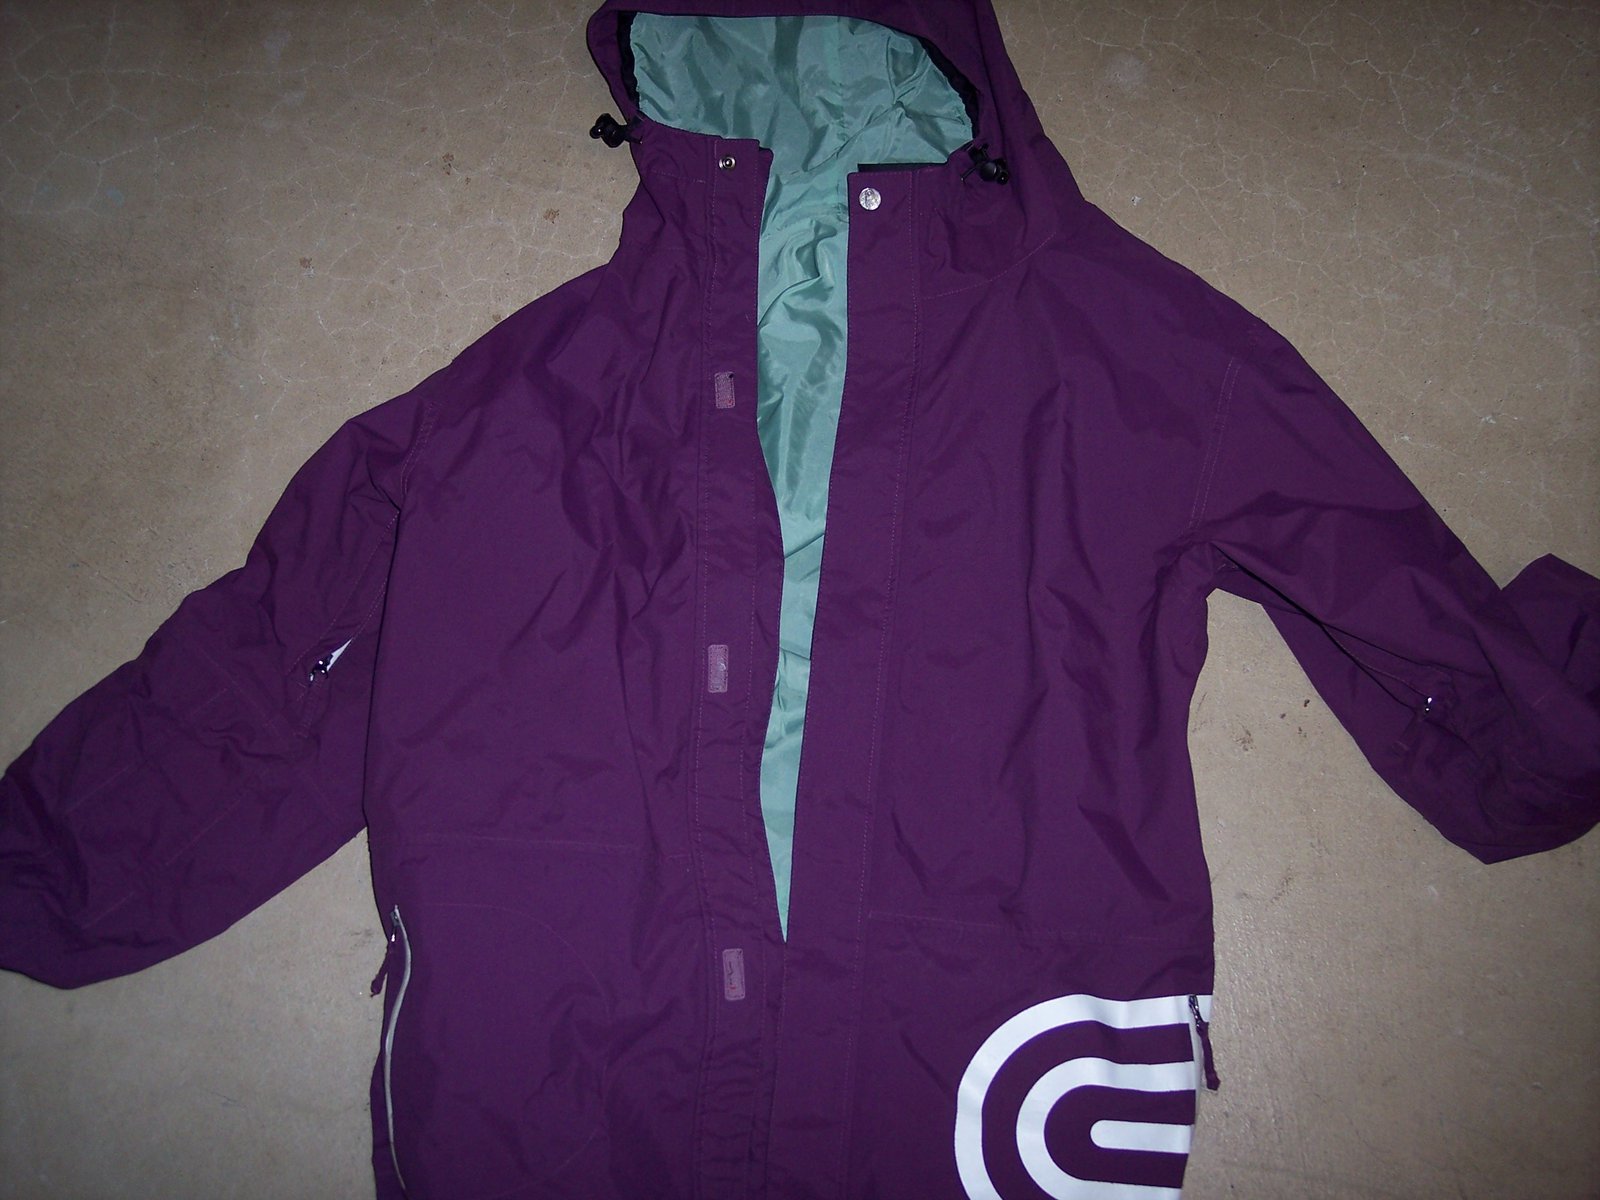 Large purple coat - 1 of 2